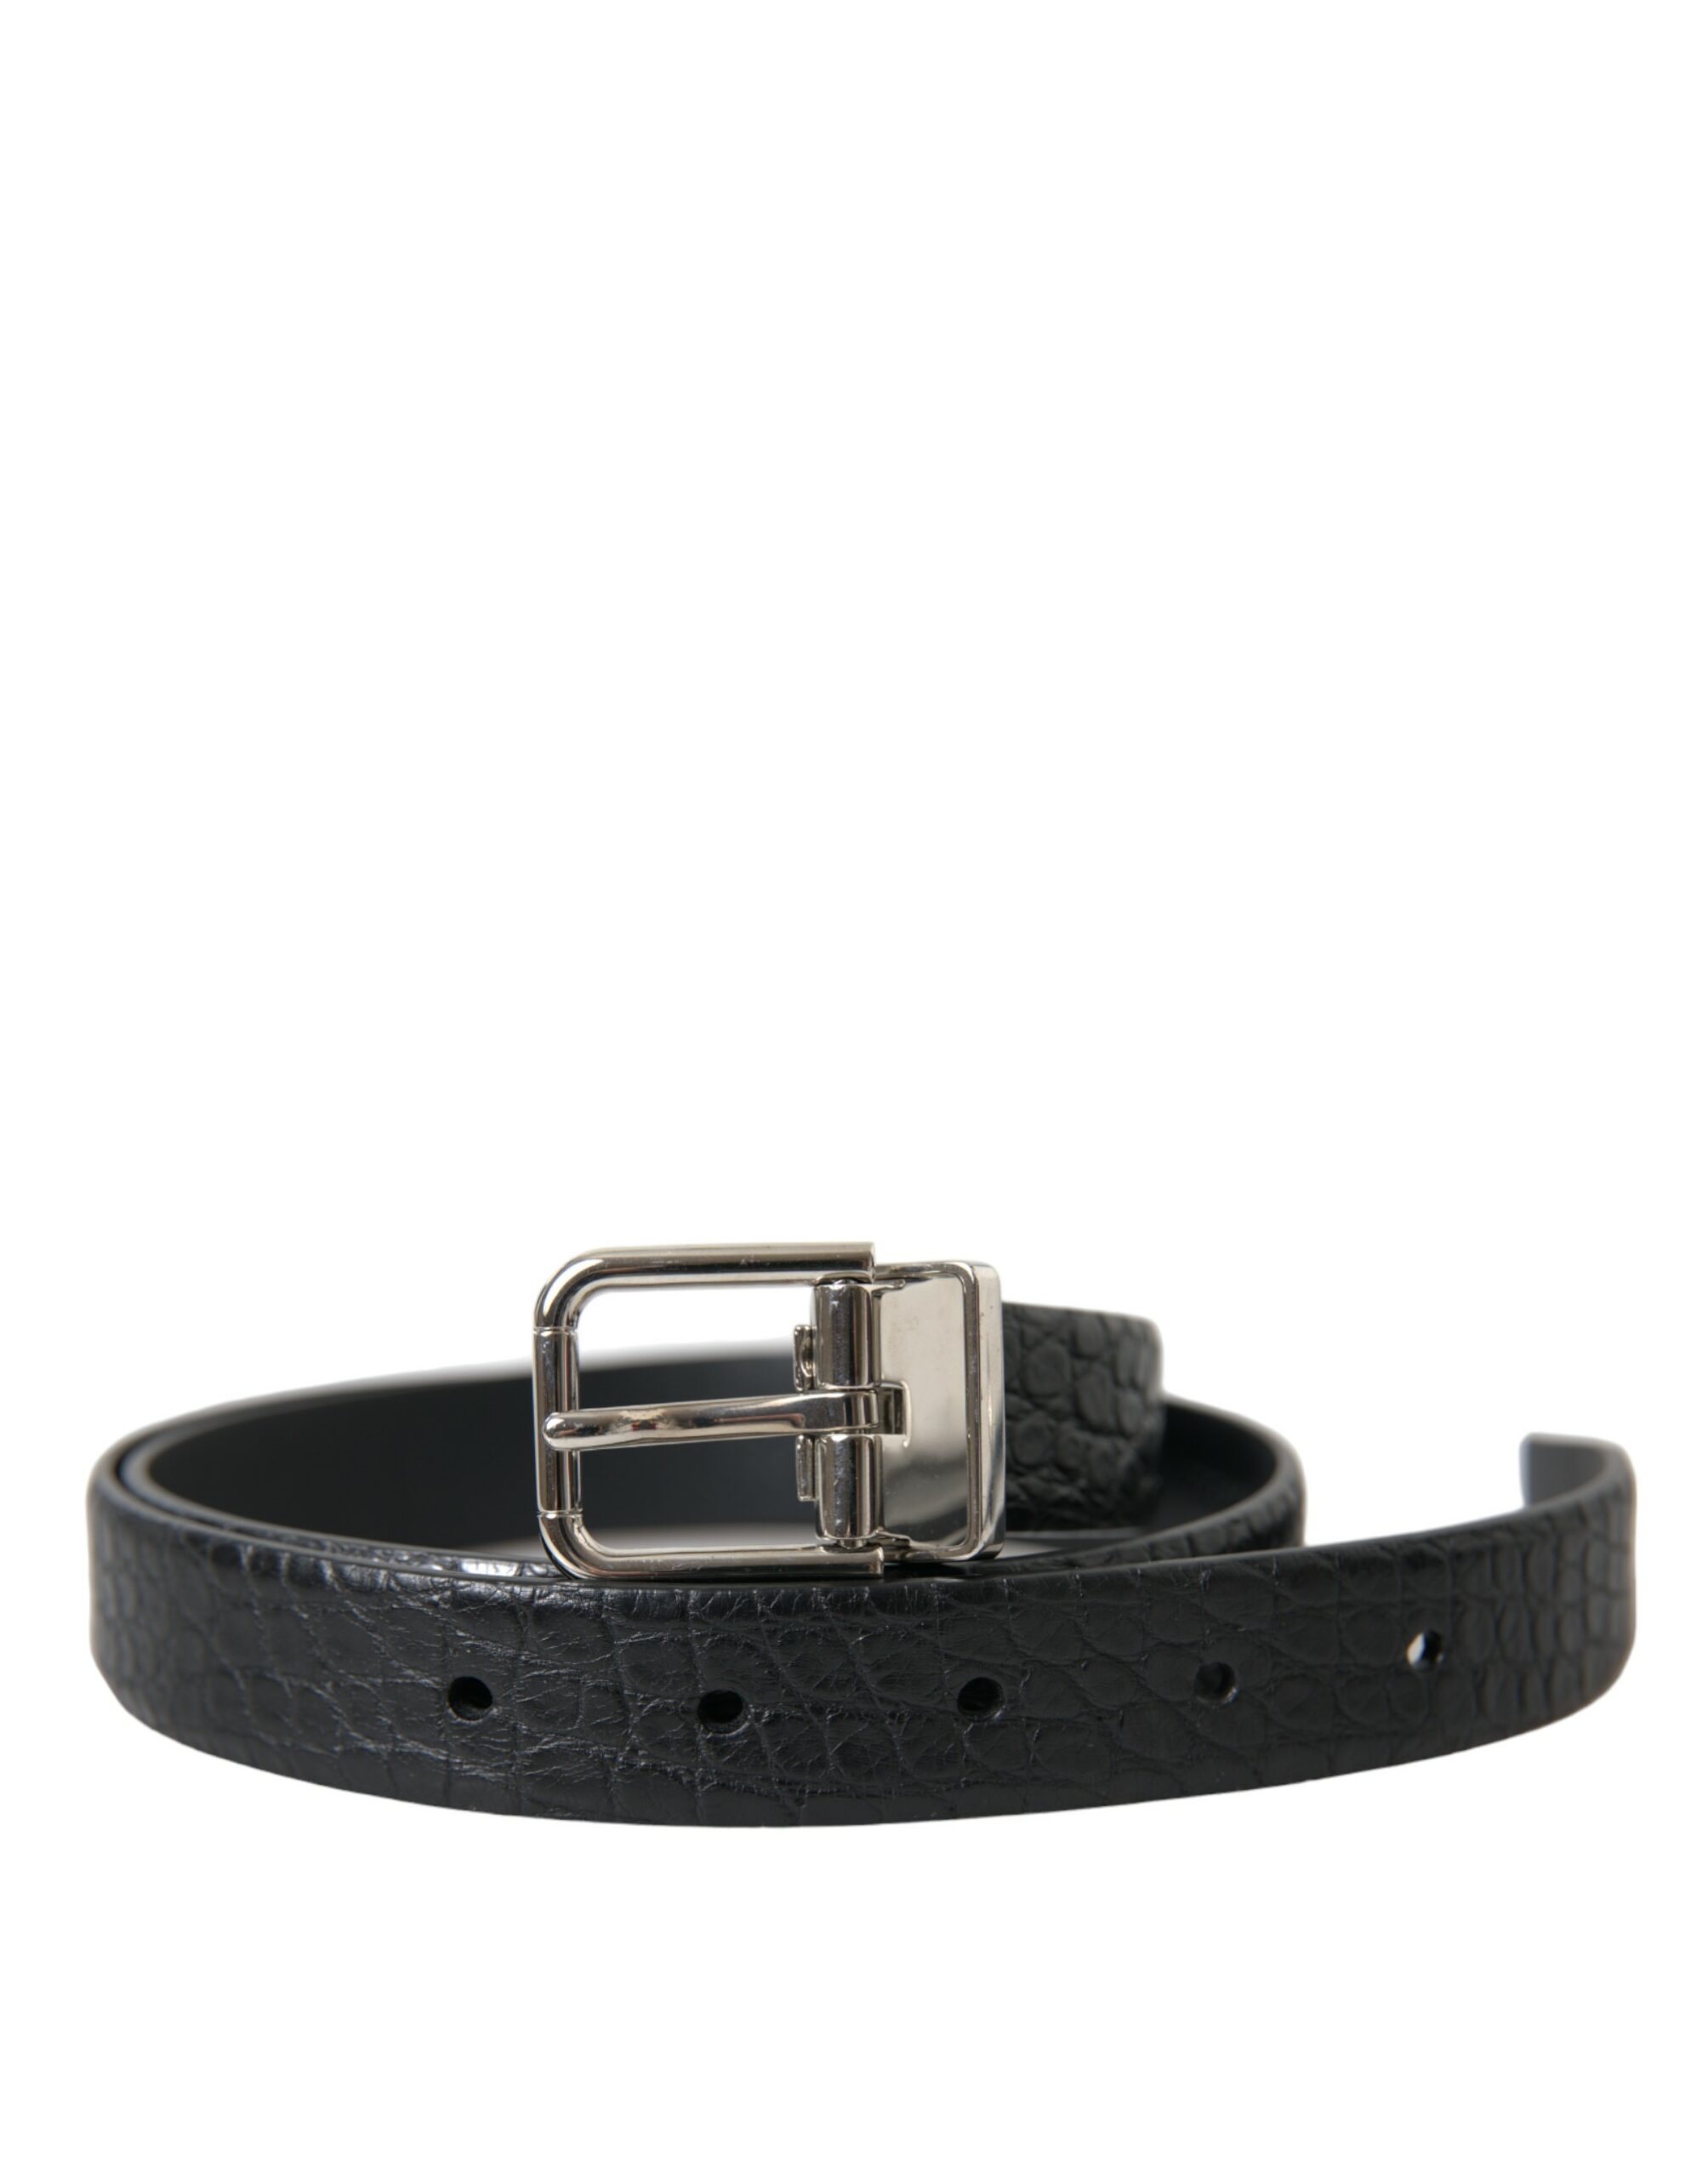 Black Dolce & Gabbana Black Alligator Leather Silver Buckle Belt 85 cm / 34 Inches